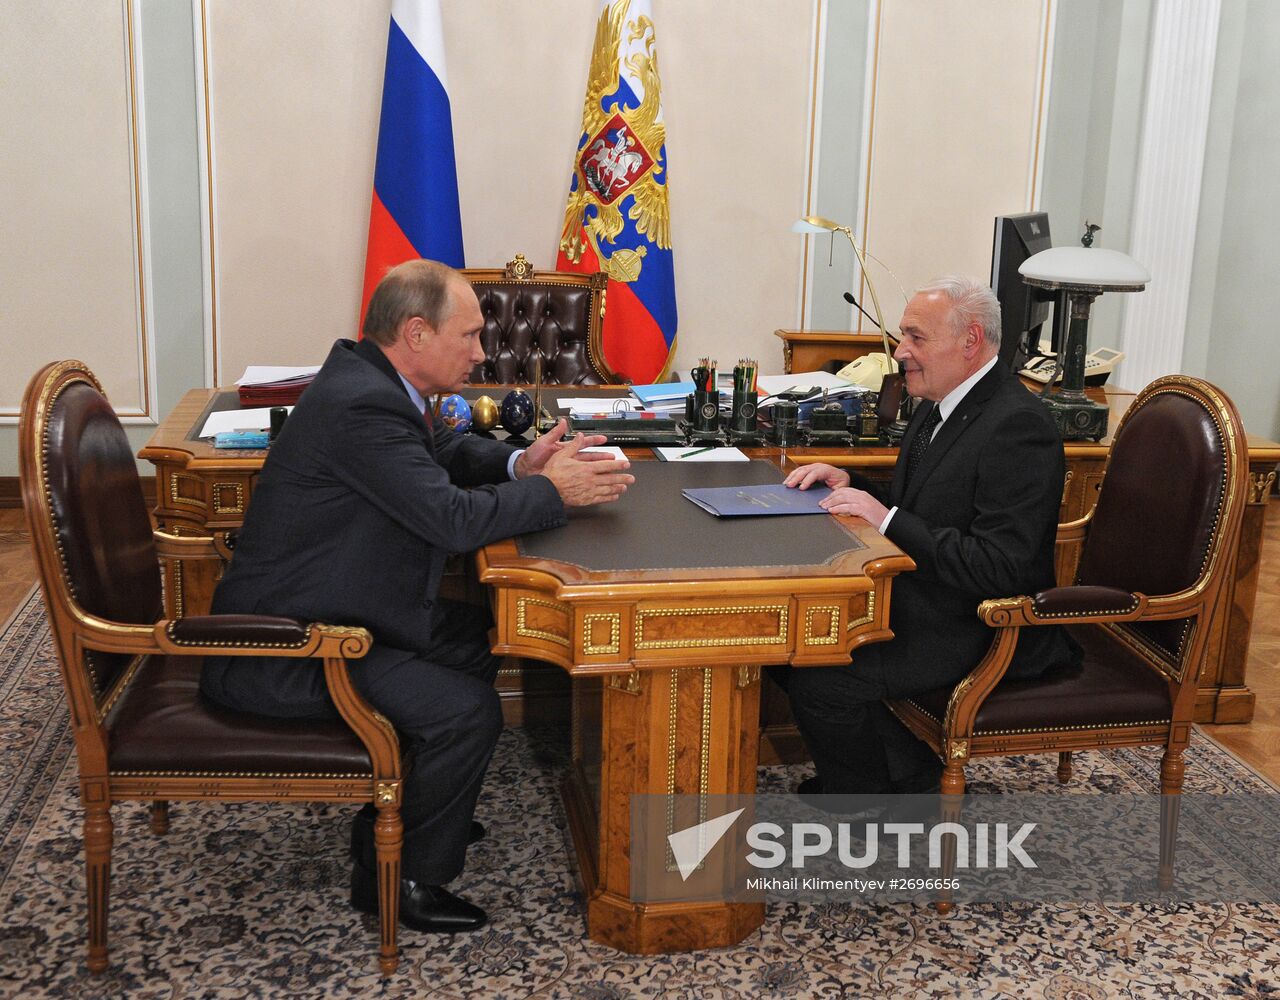 Vladimir Putin meets with Magadan Region Governor Vladimir Pechenyi